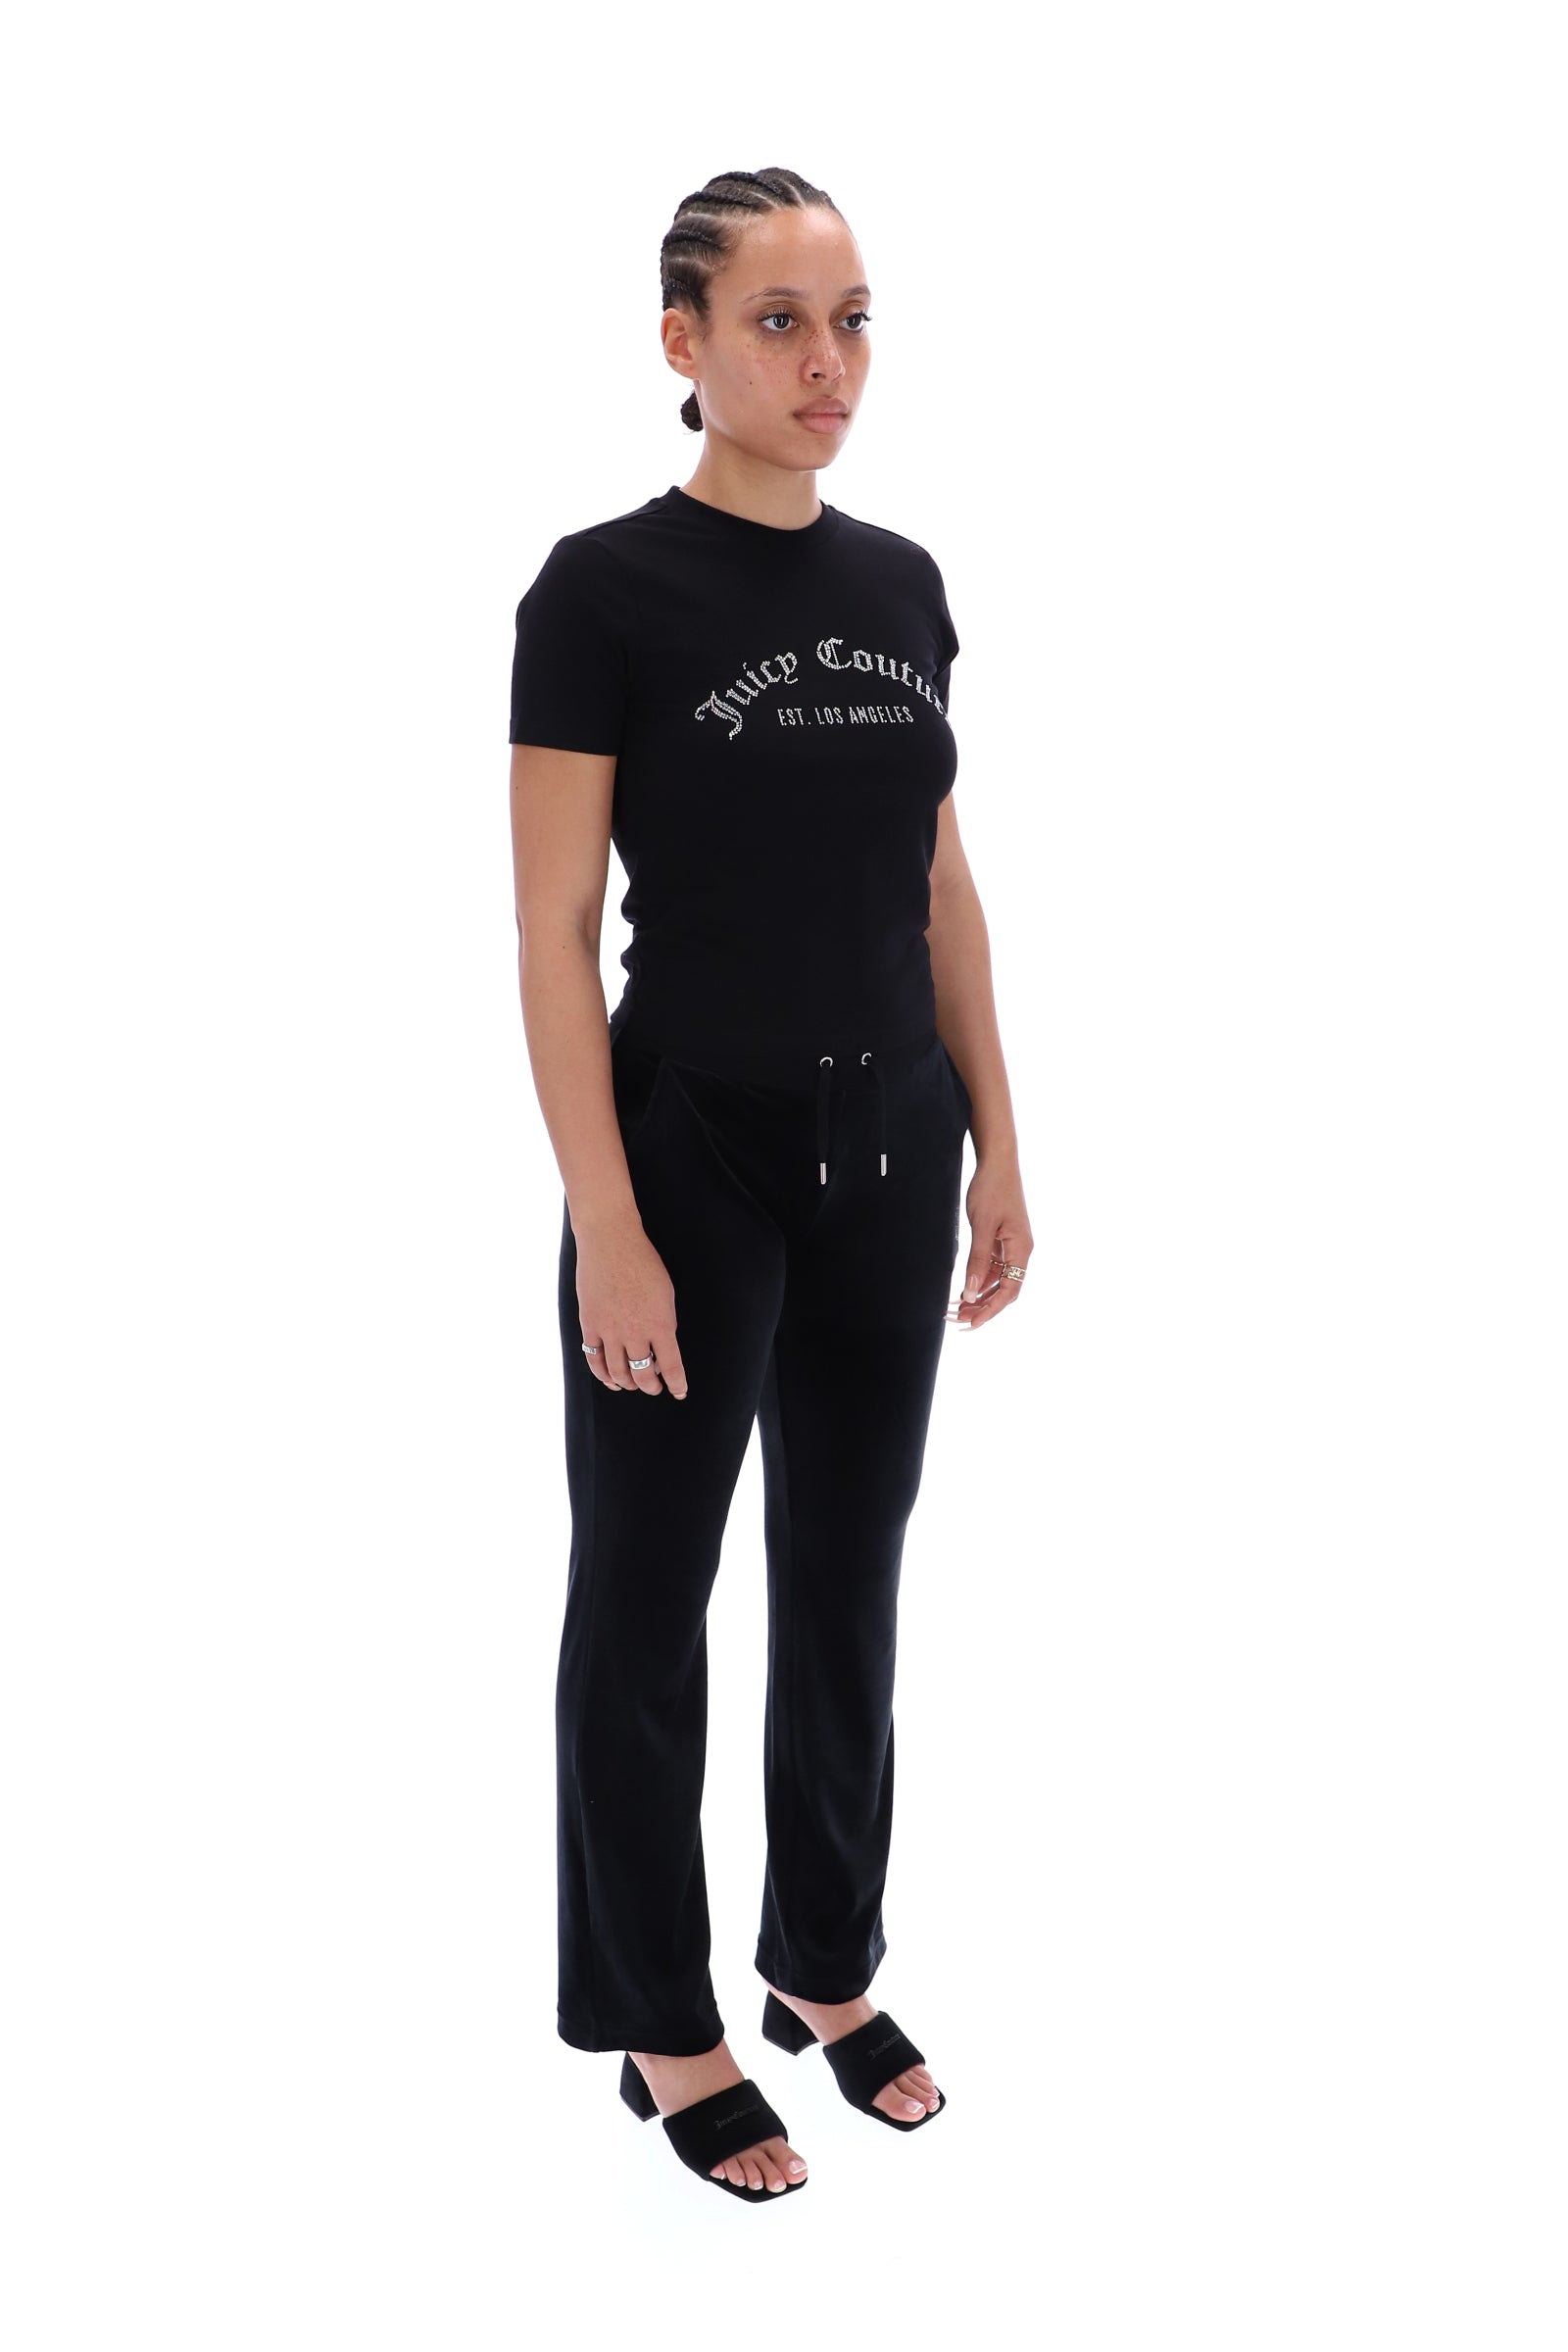 Juicy Couture Pantaloni Donna VEJB70016 BLACK